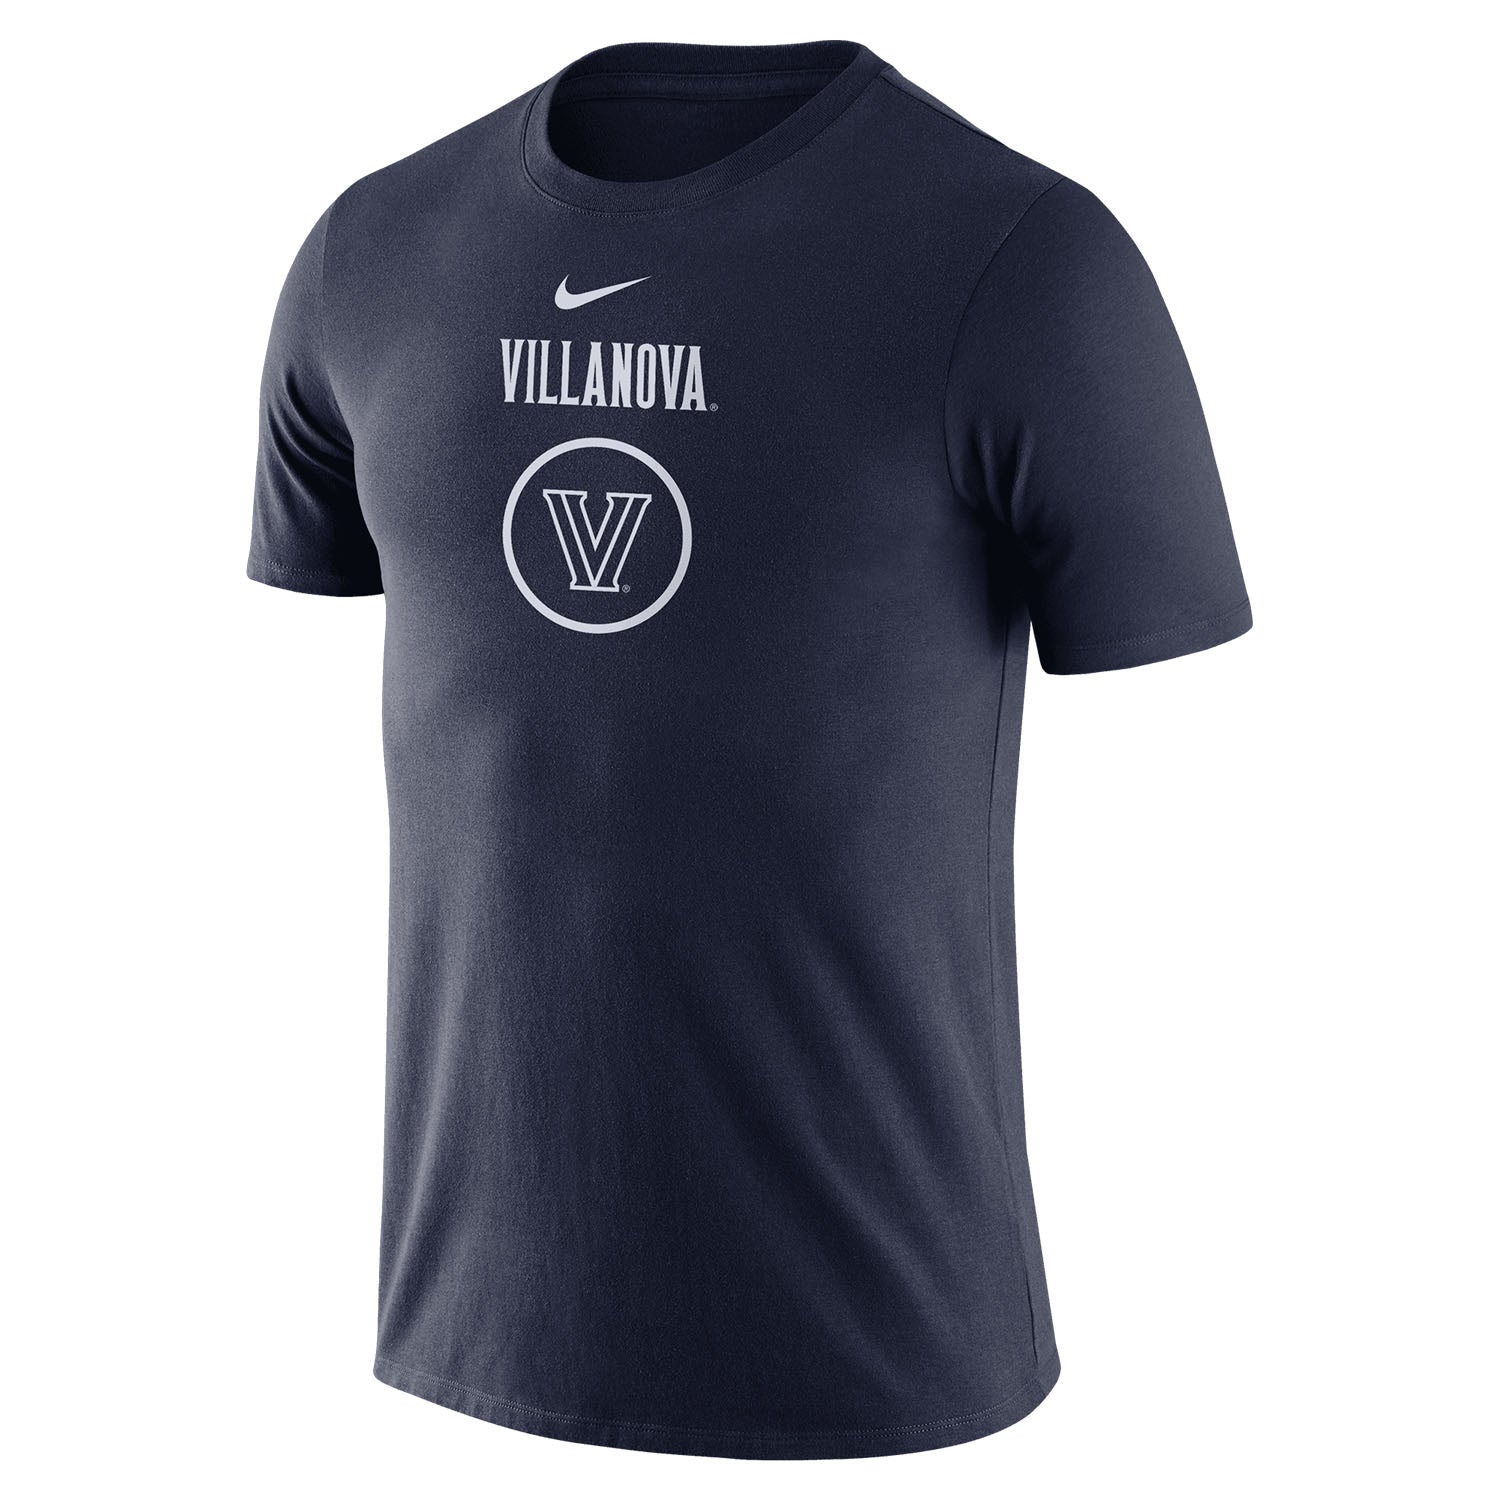 New white threads 👀 Nike pt. 1 - Villanova Basketball